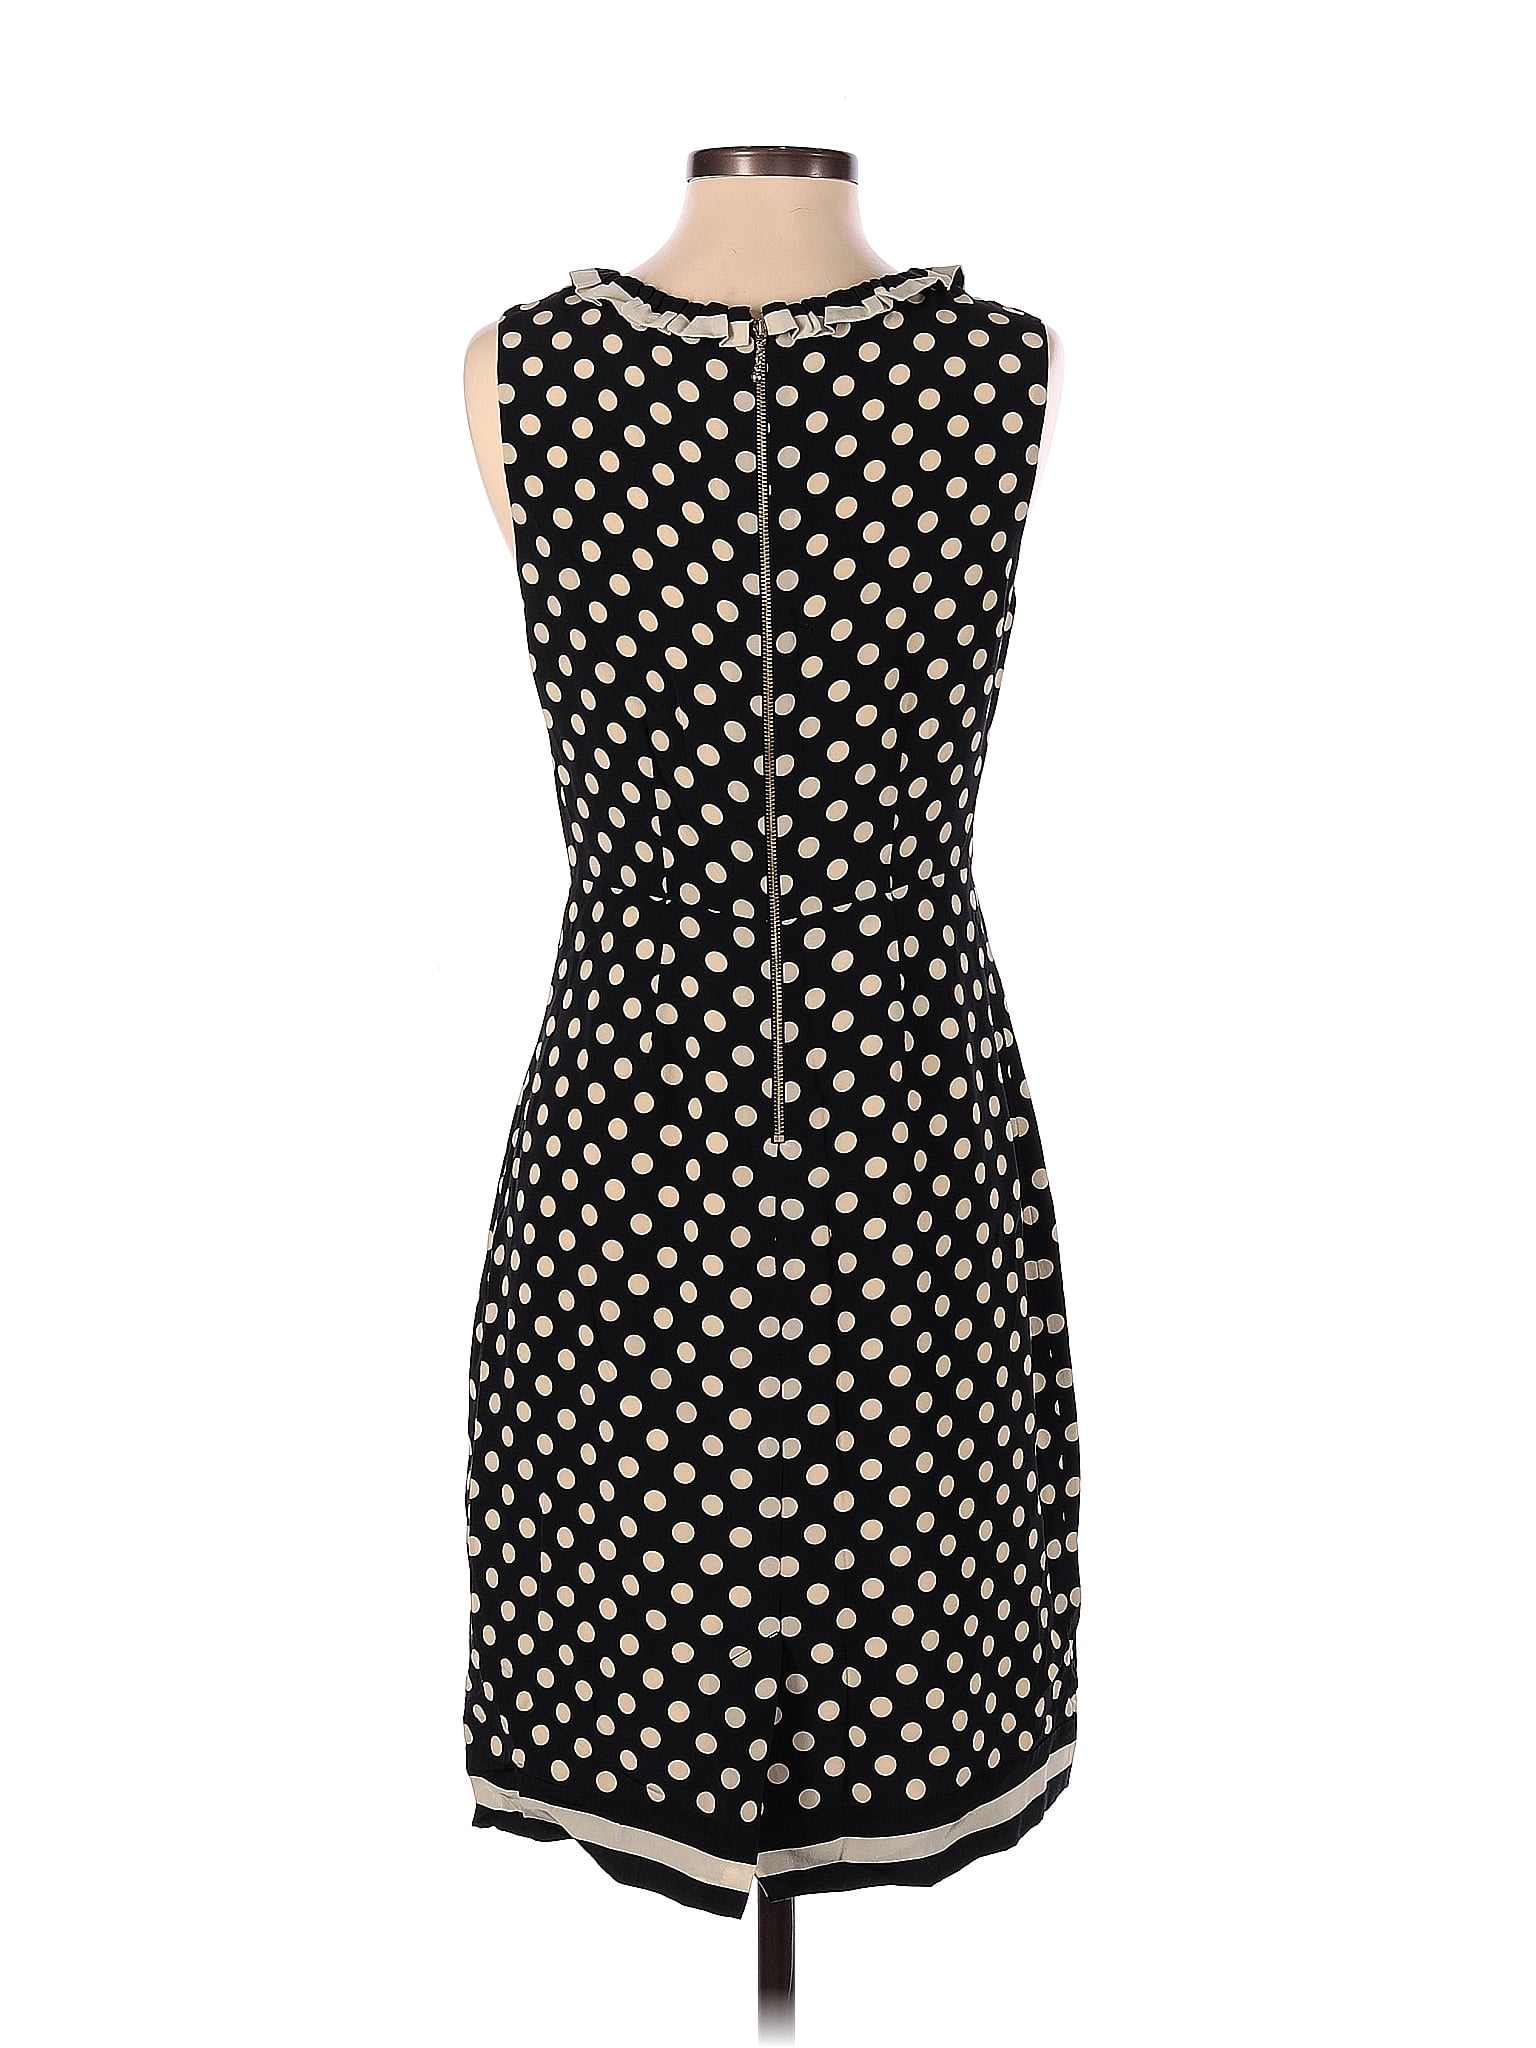 Kate Spade New York Polka Dots Black Casual Dress Size 4 - 74% off